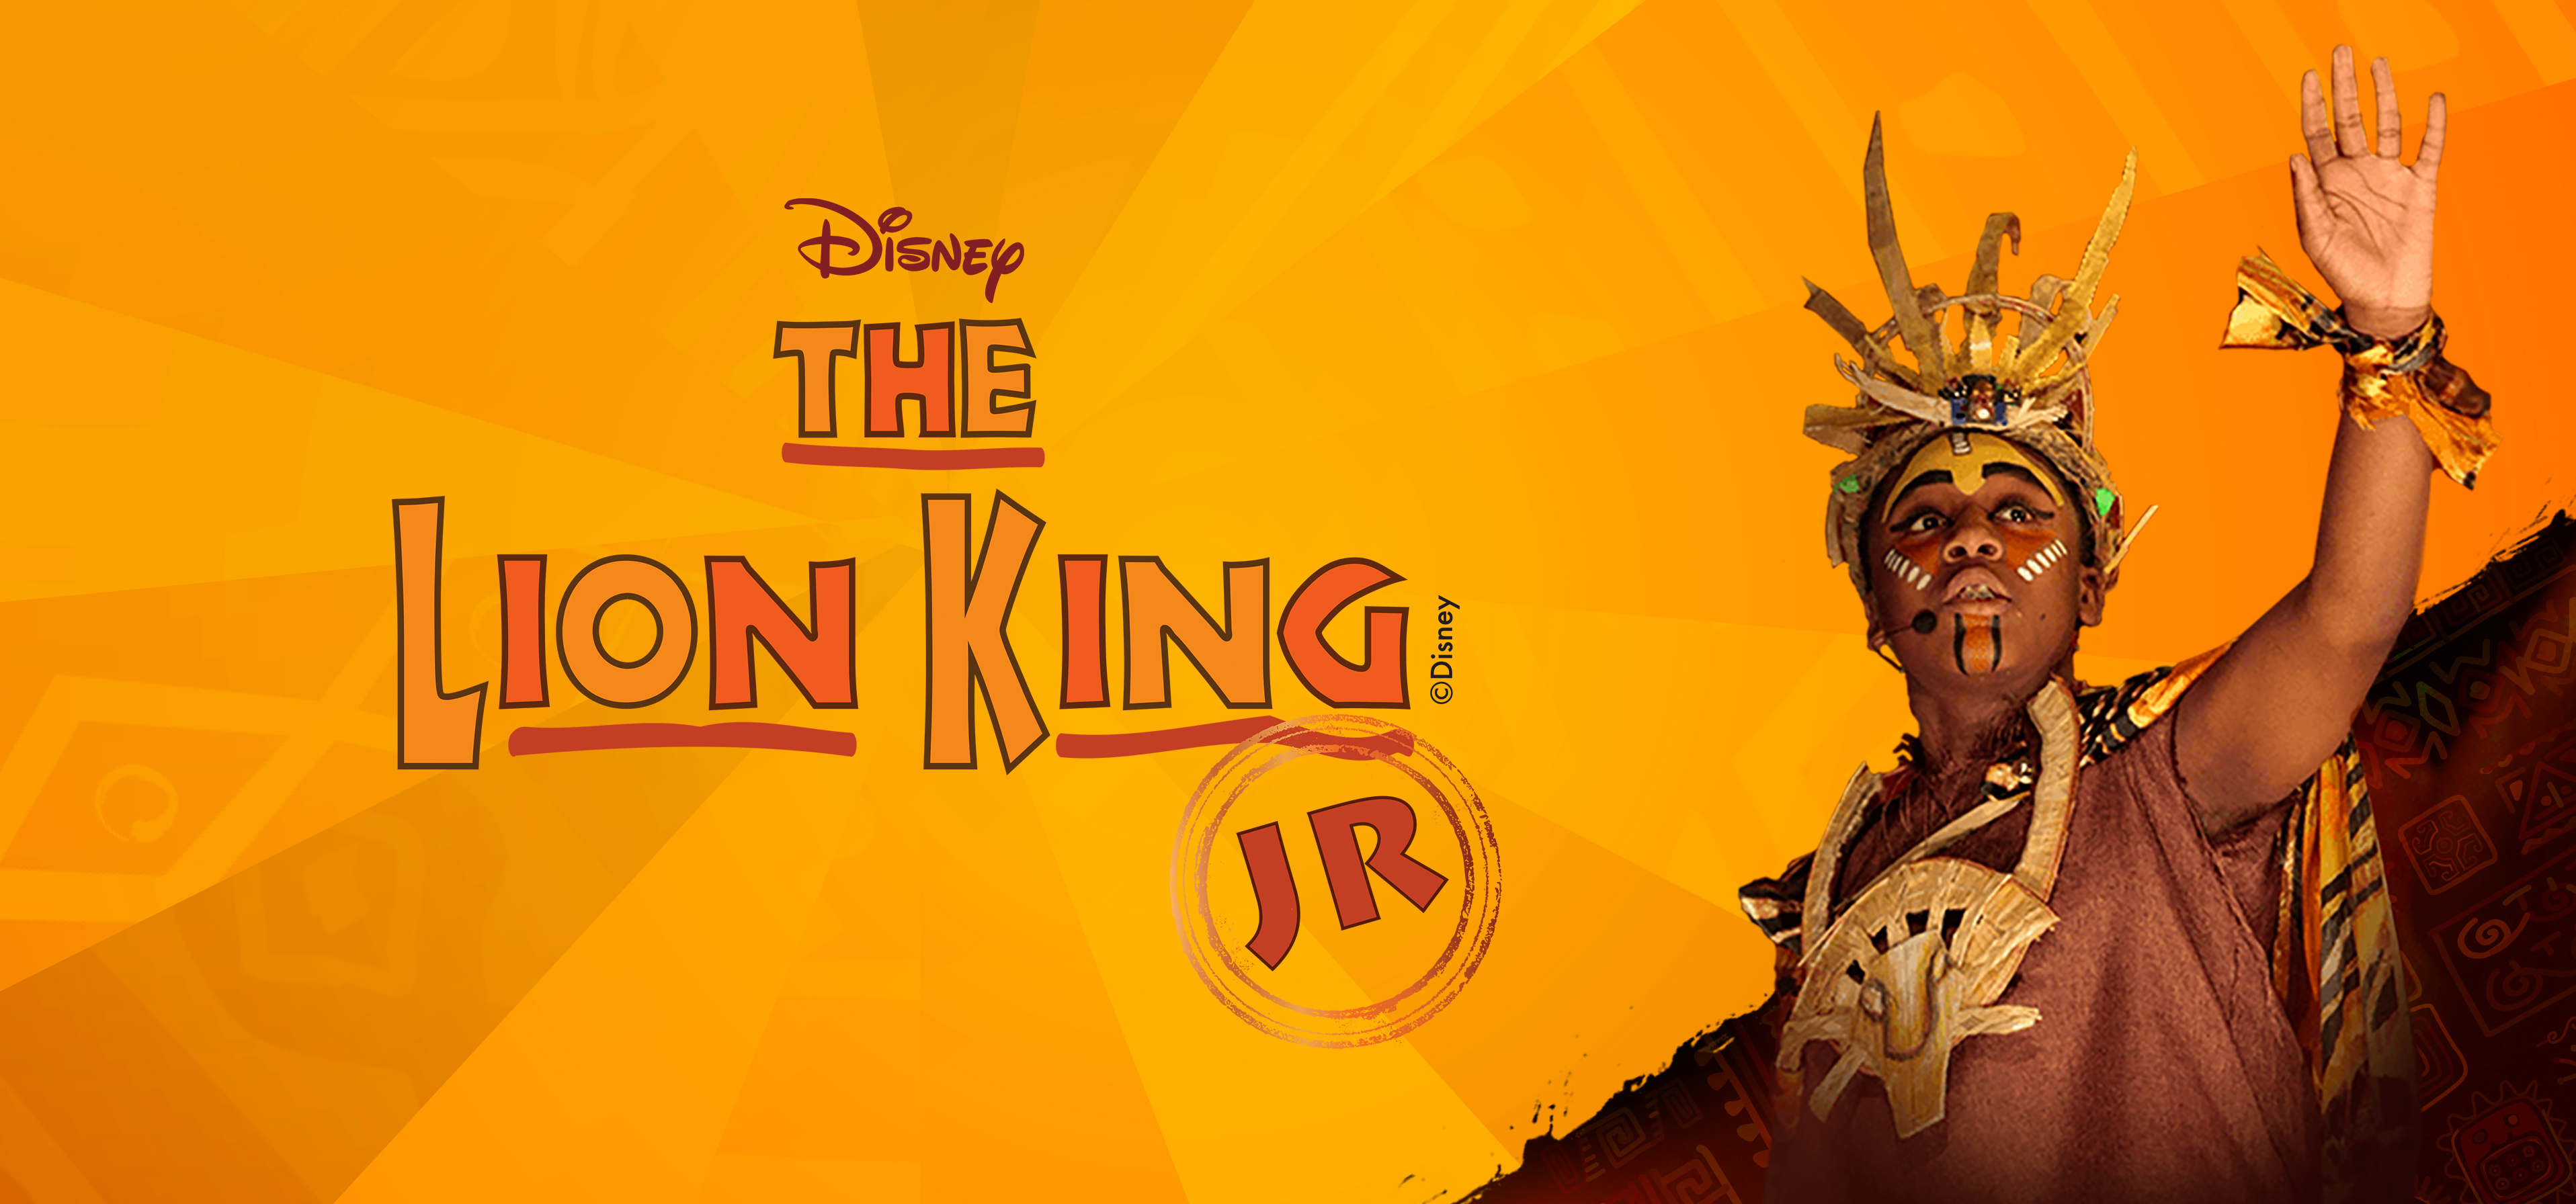 The Lion King JR. logo